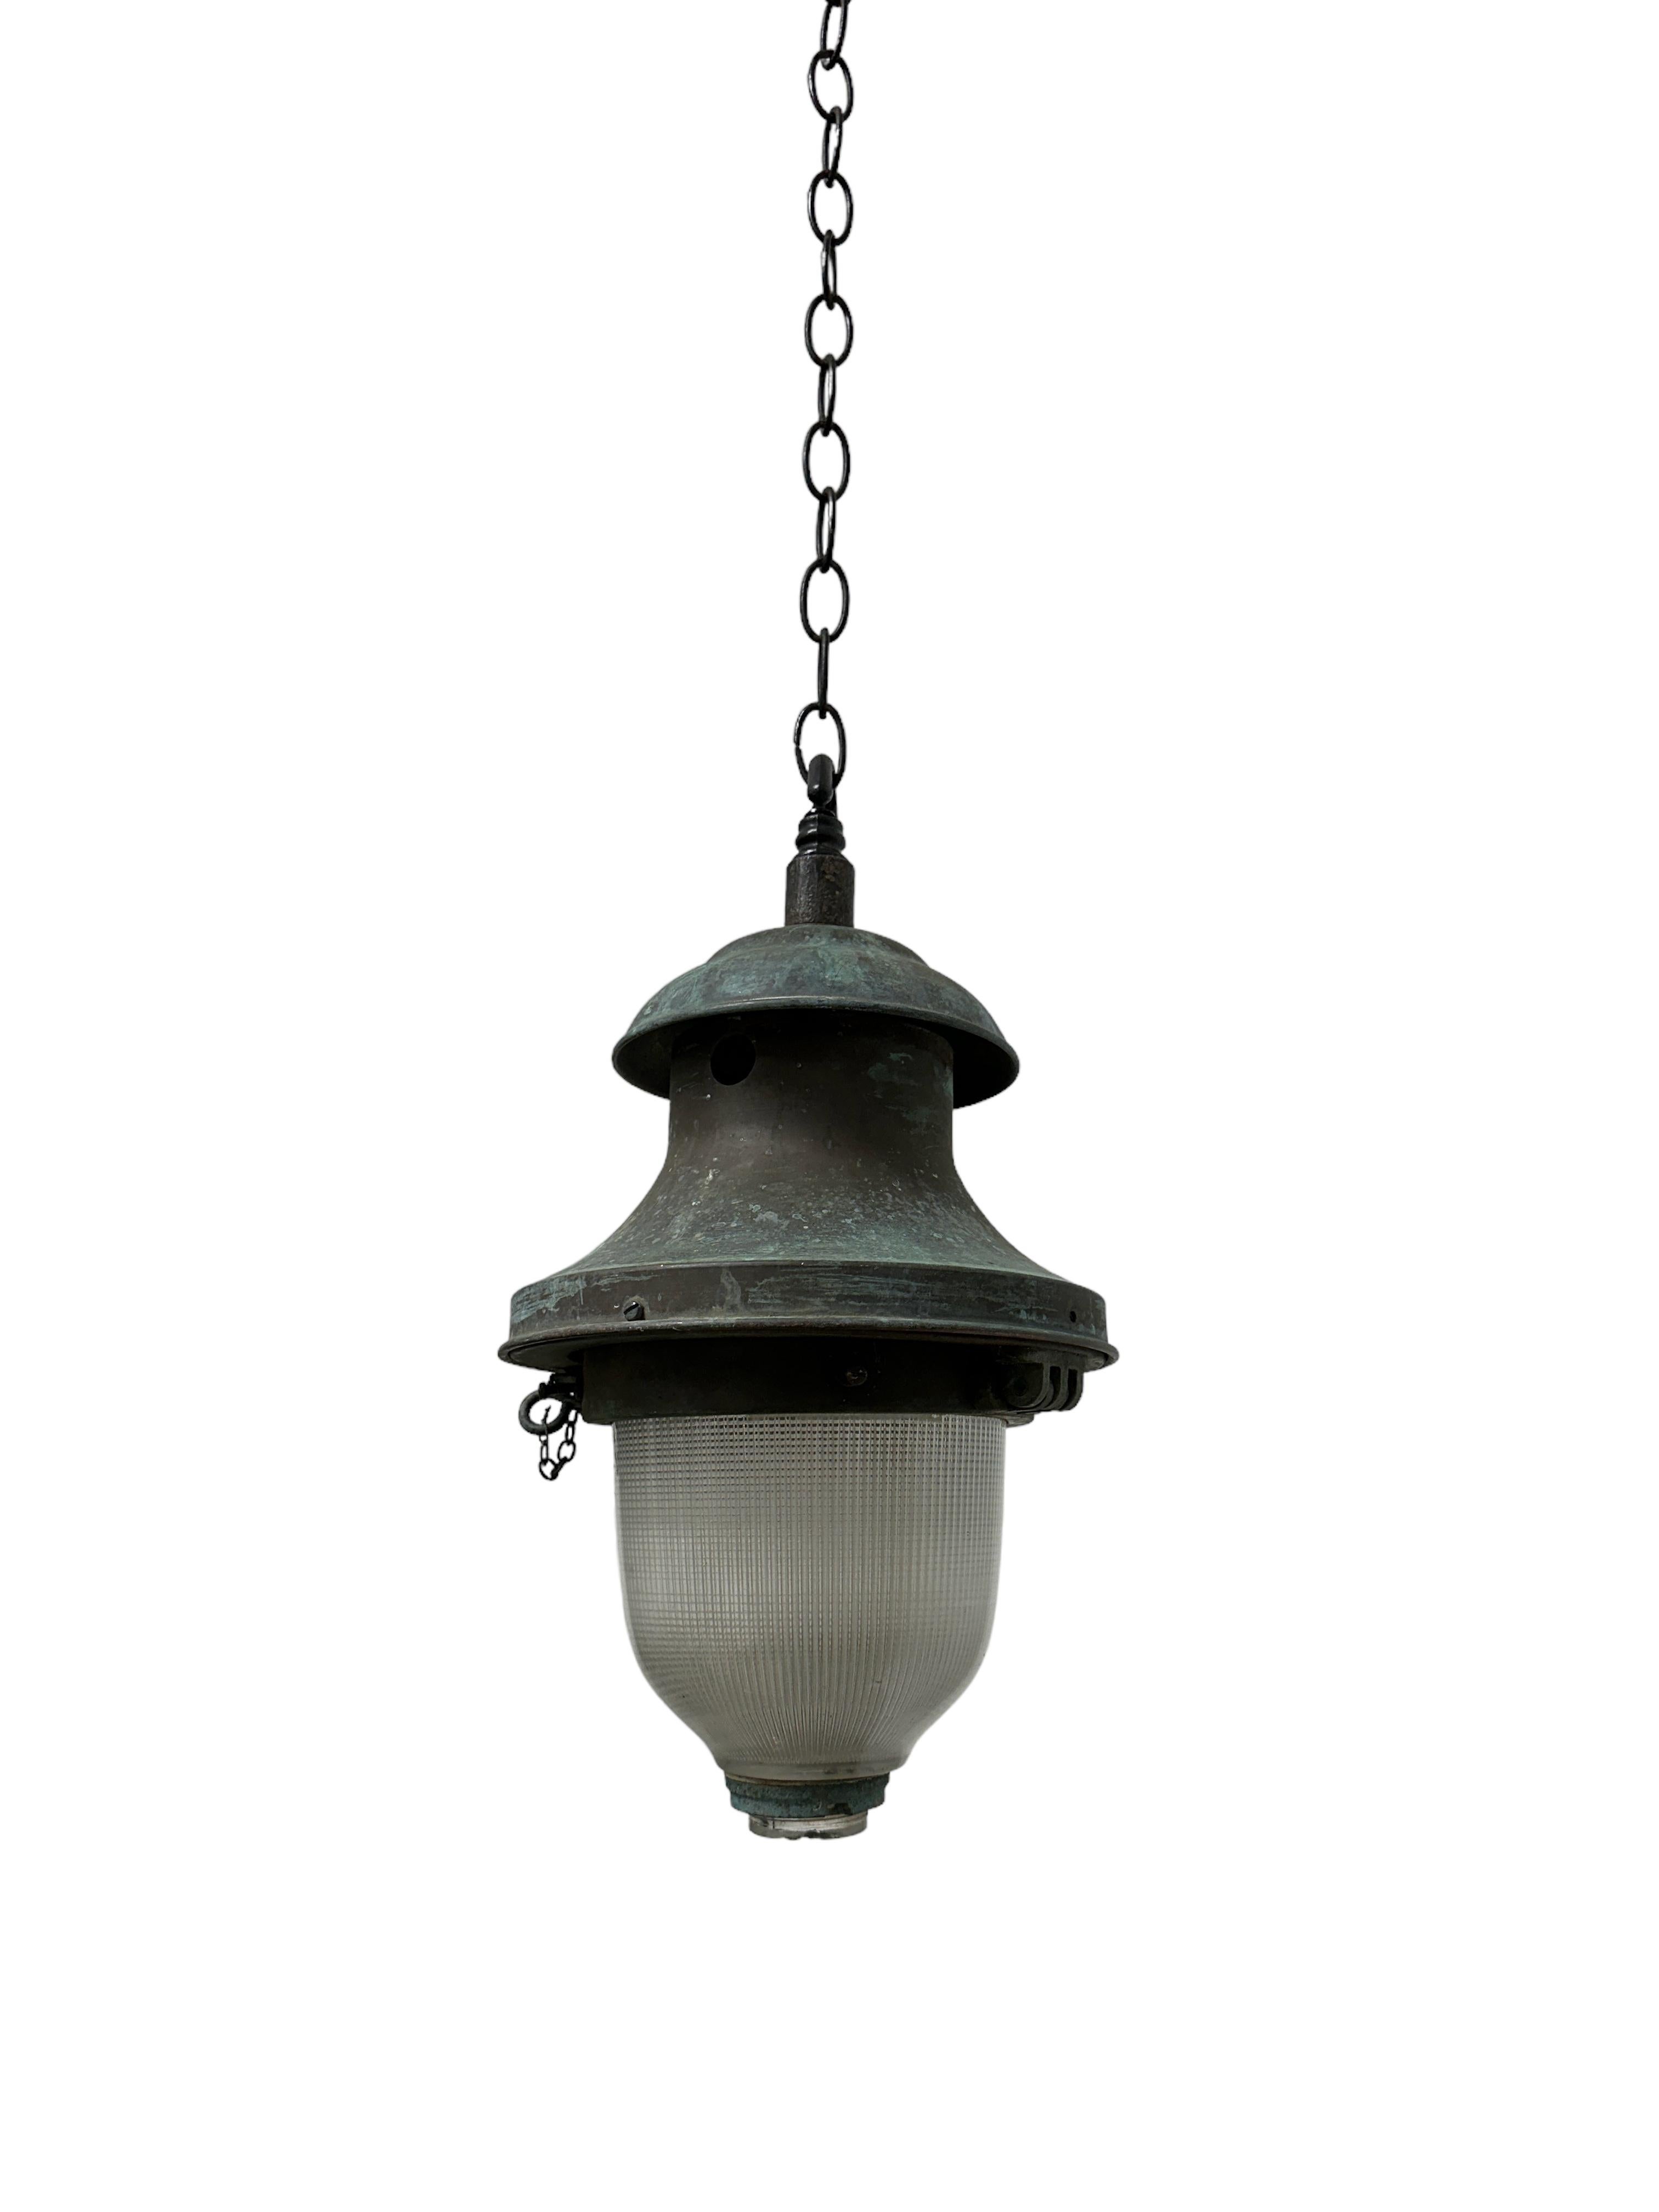 Copper Antique Industrial French Holophane Devant Ceiling Pendant Street Light Lamp